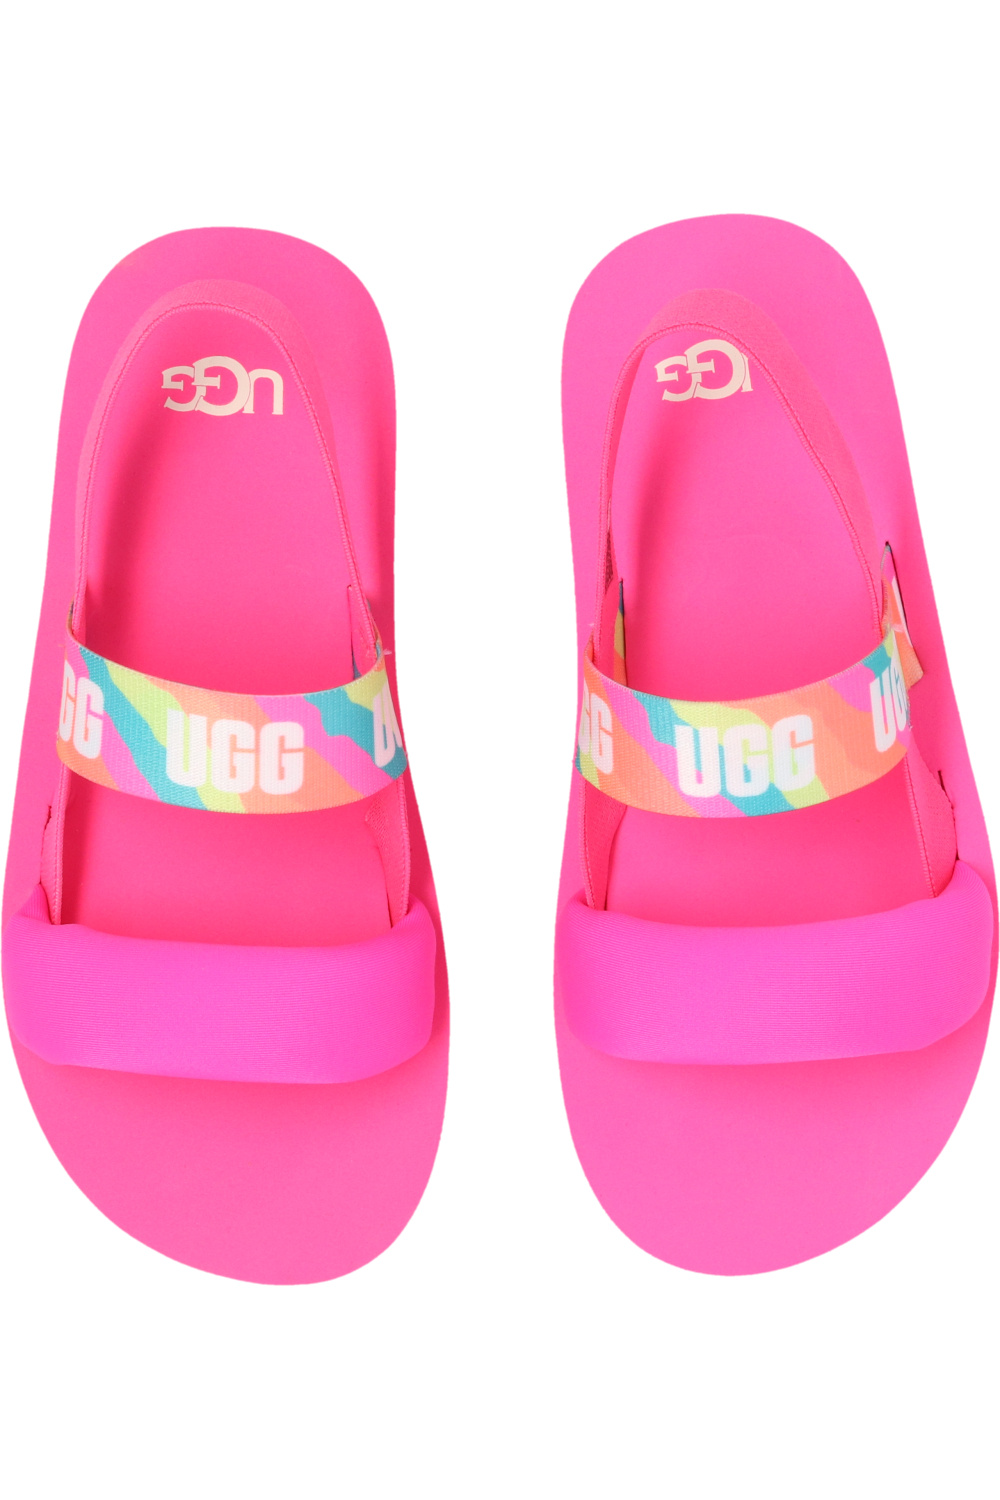 ugg Slipper Kids ‘Zuma Sling’ sandals